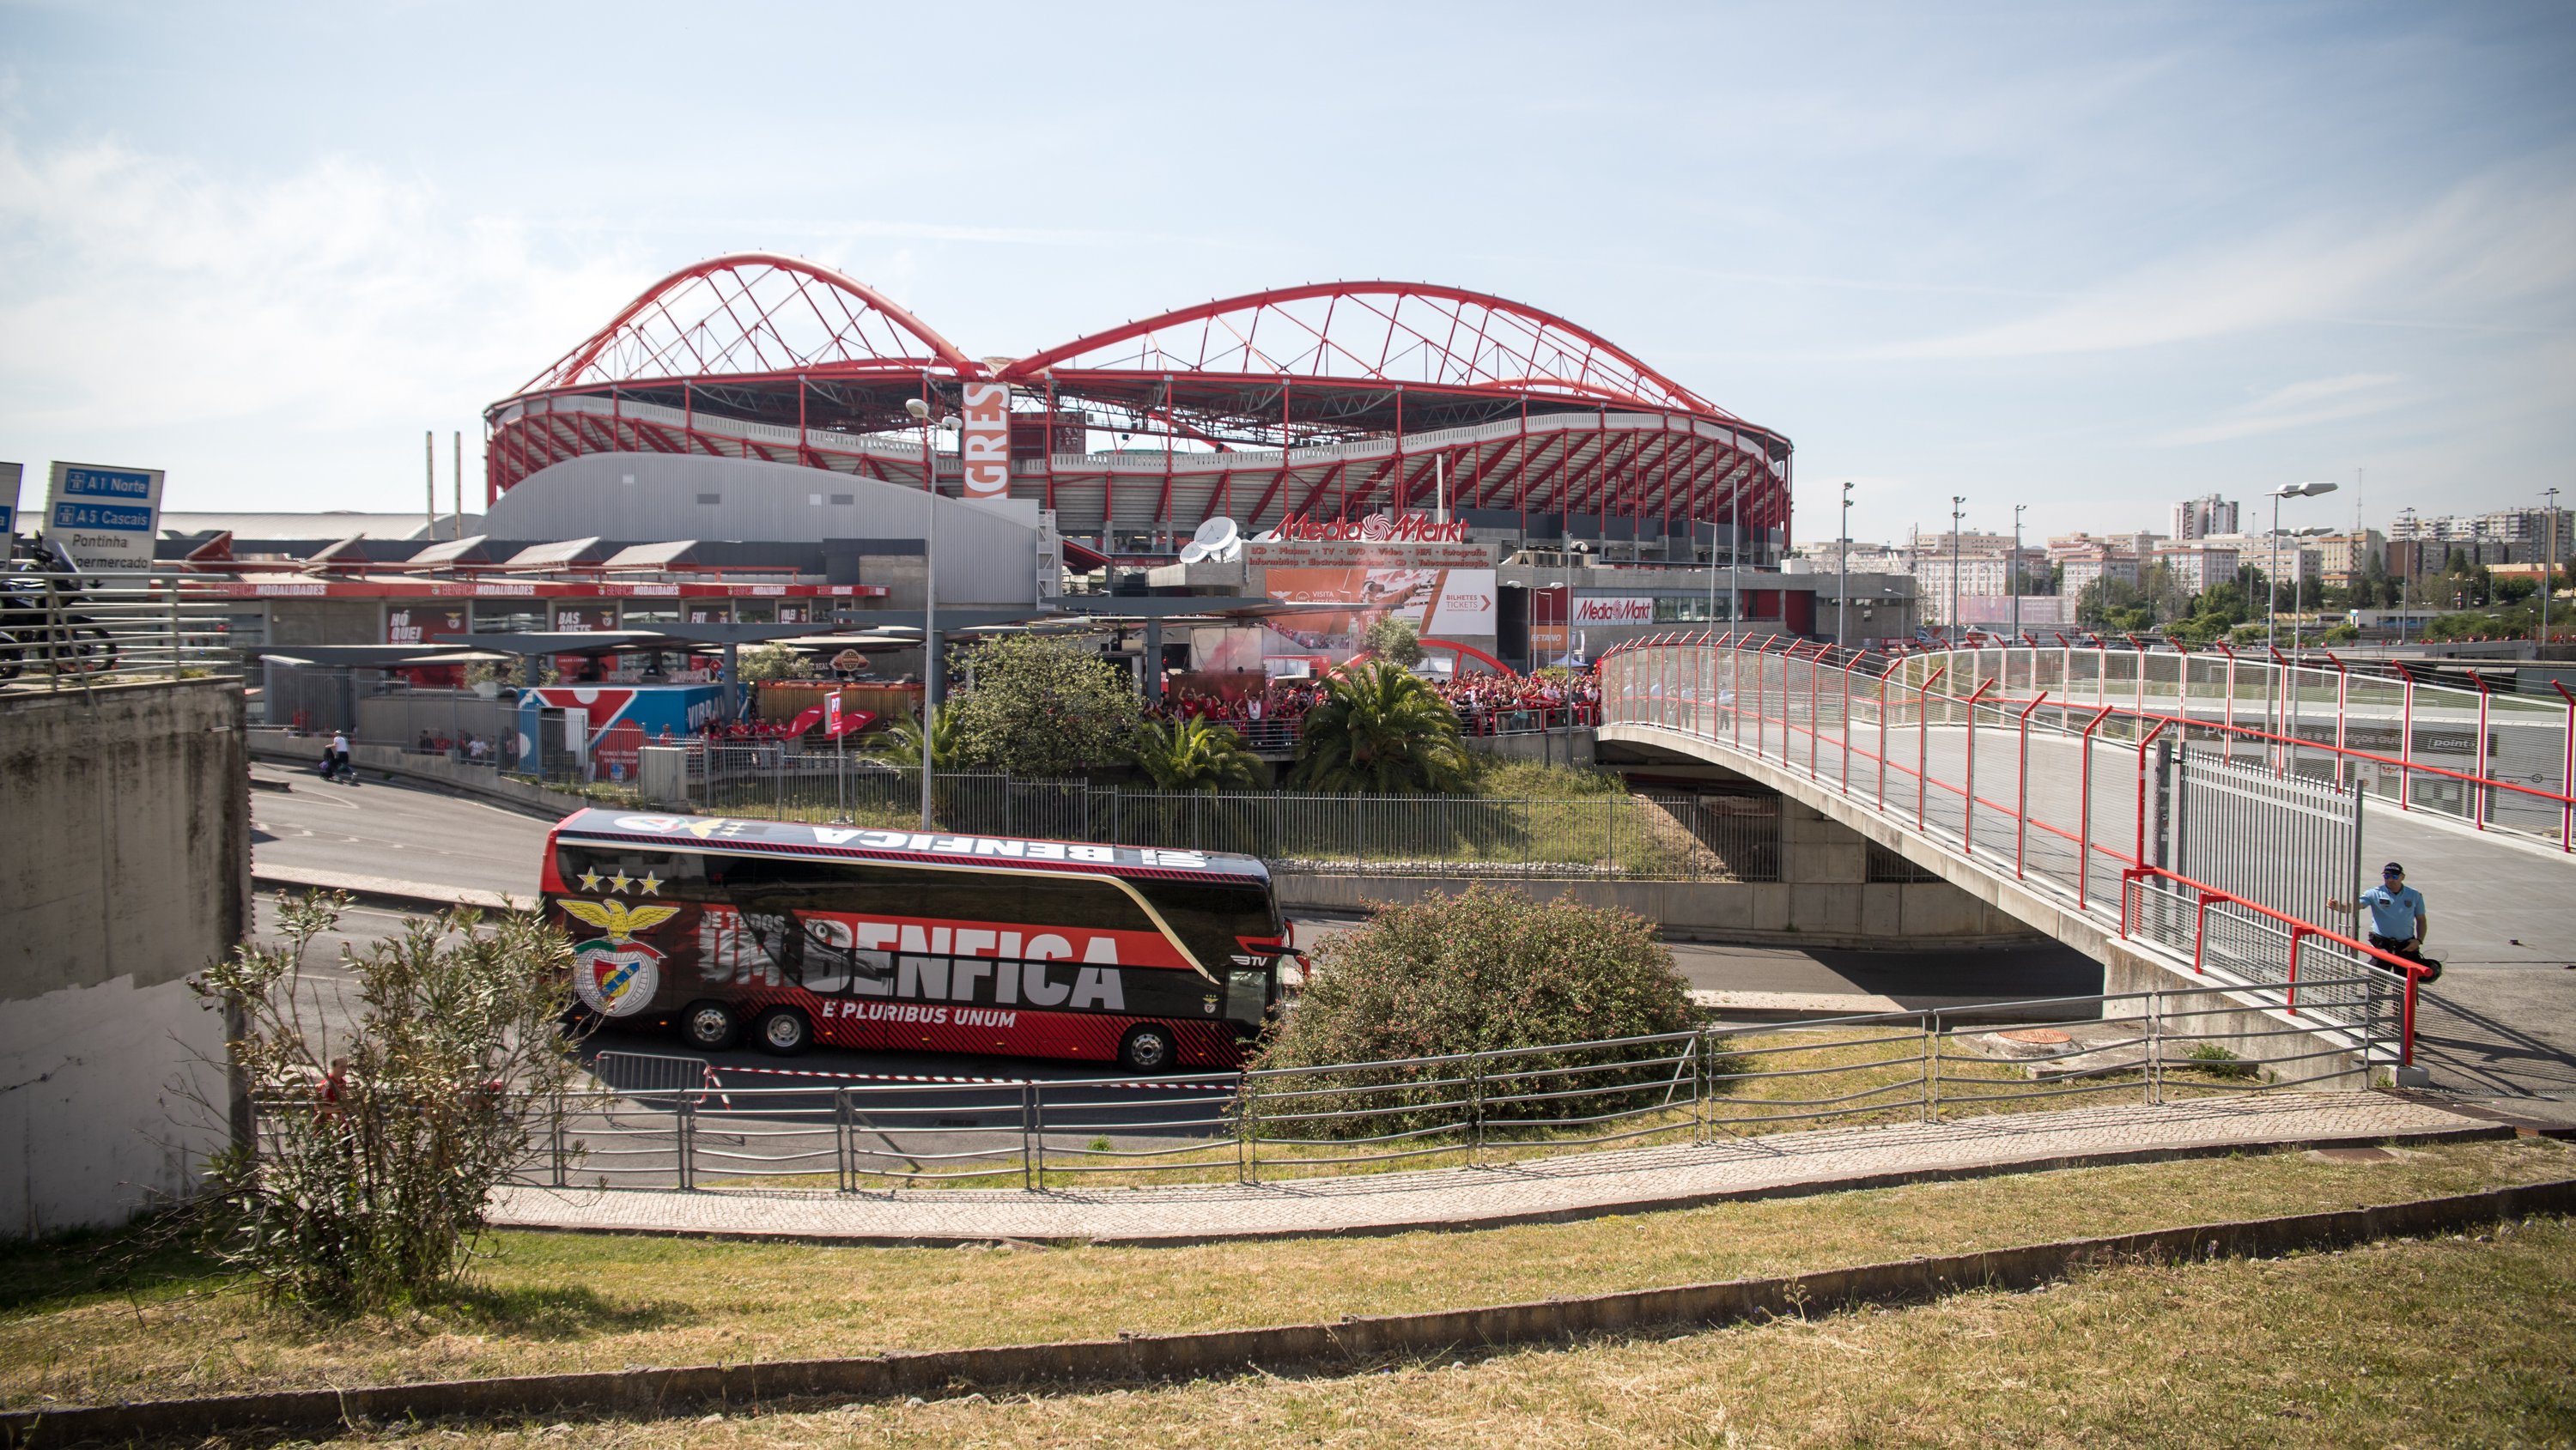 Chegada dos adeptos do Benfica ao estádio da Luz, antes do jogo entre o Sport Lisboa e Benfica e o Futebol Clube de Porto, a contar para a 33ª jornada da Primeira Liga 2021/22. Lisboa, 07 de Maio de 2022. TOMÁS SILVA/OBSERVADOR